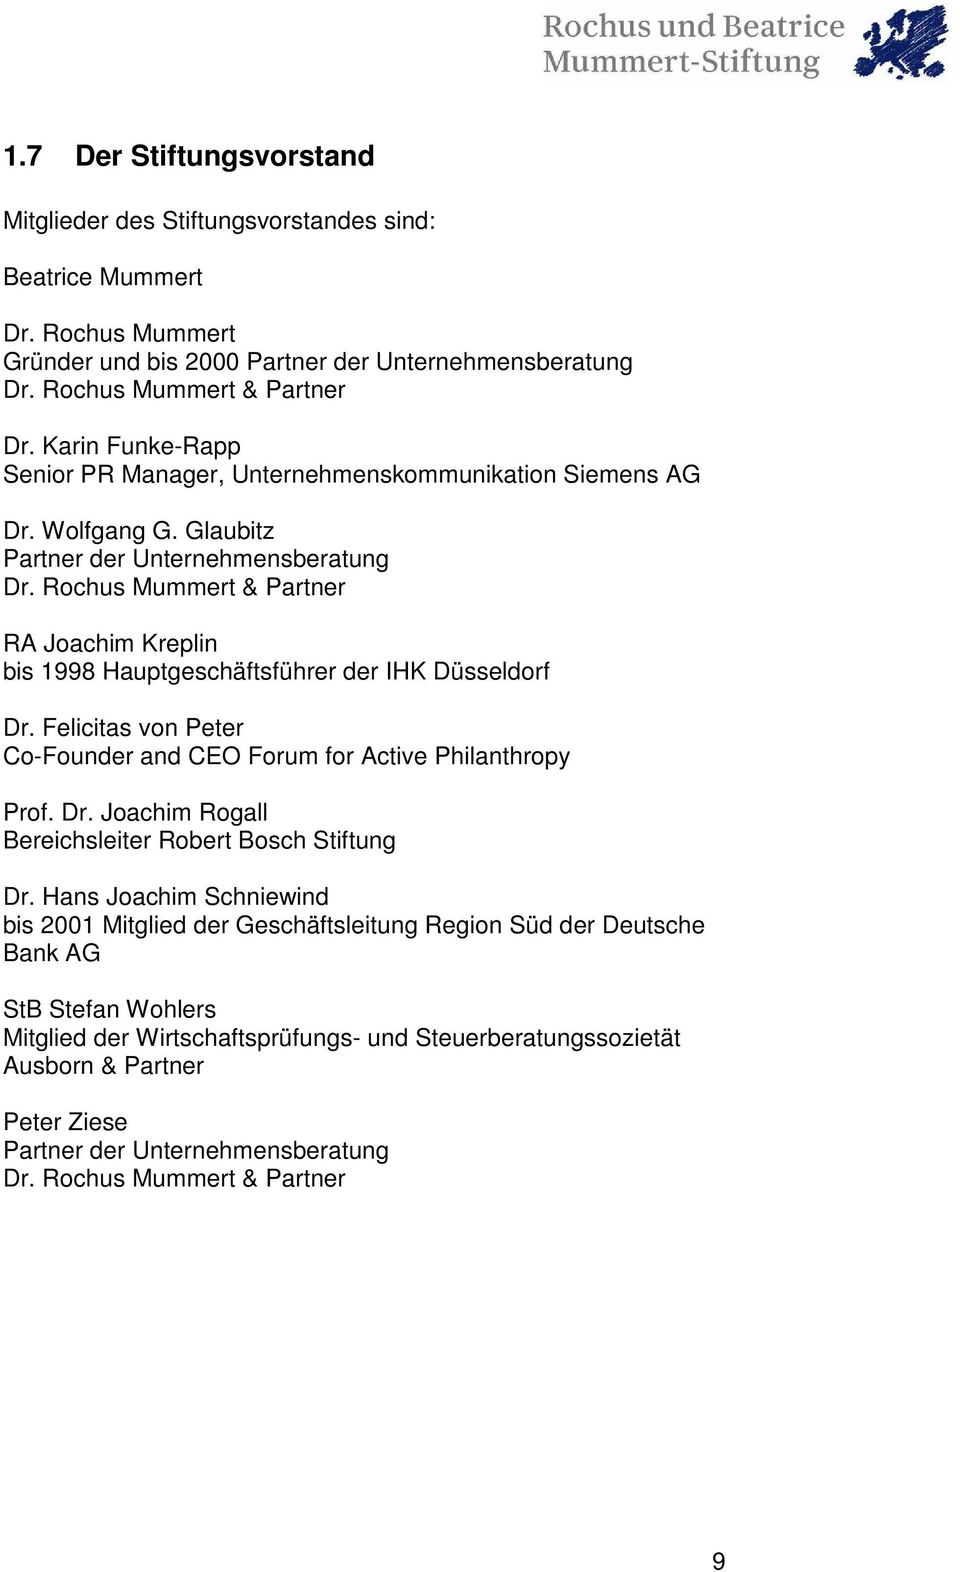 Rochus Mummert & Partner RA Joachim Kreplin bis 1998 Hauptgeschäftsführer der IHK Düsseldorf Dr. Felicitas von Peter Co-Founder and CEO Forum for Active Philanthropy Prof. Dr. Joachim Rogall Bereichsleiter Robert Bosch Stiftung Dr.